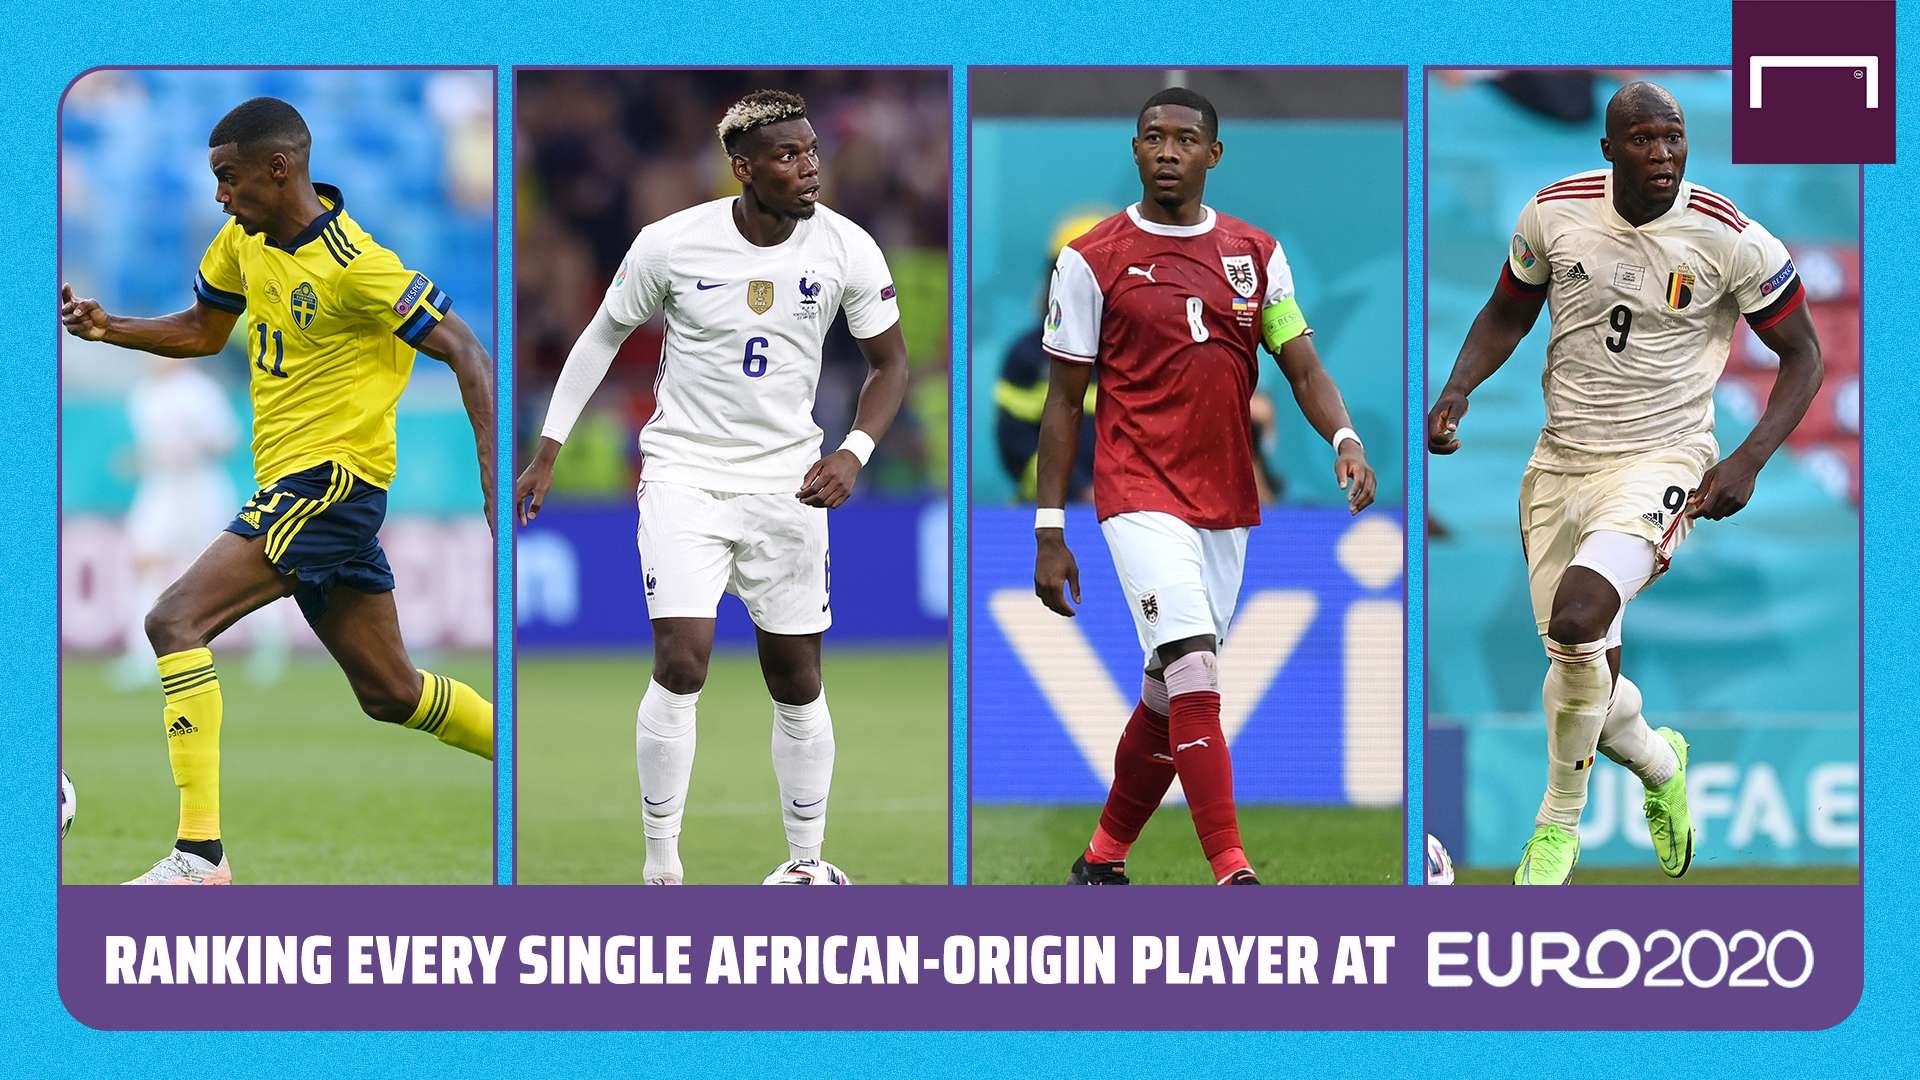 Africa at Euro 2020